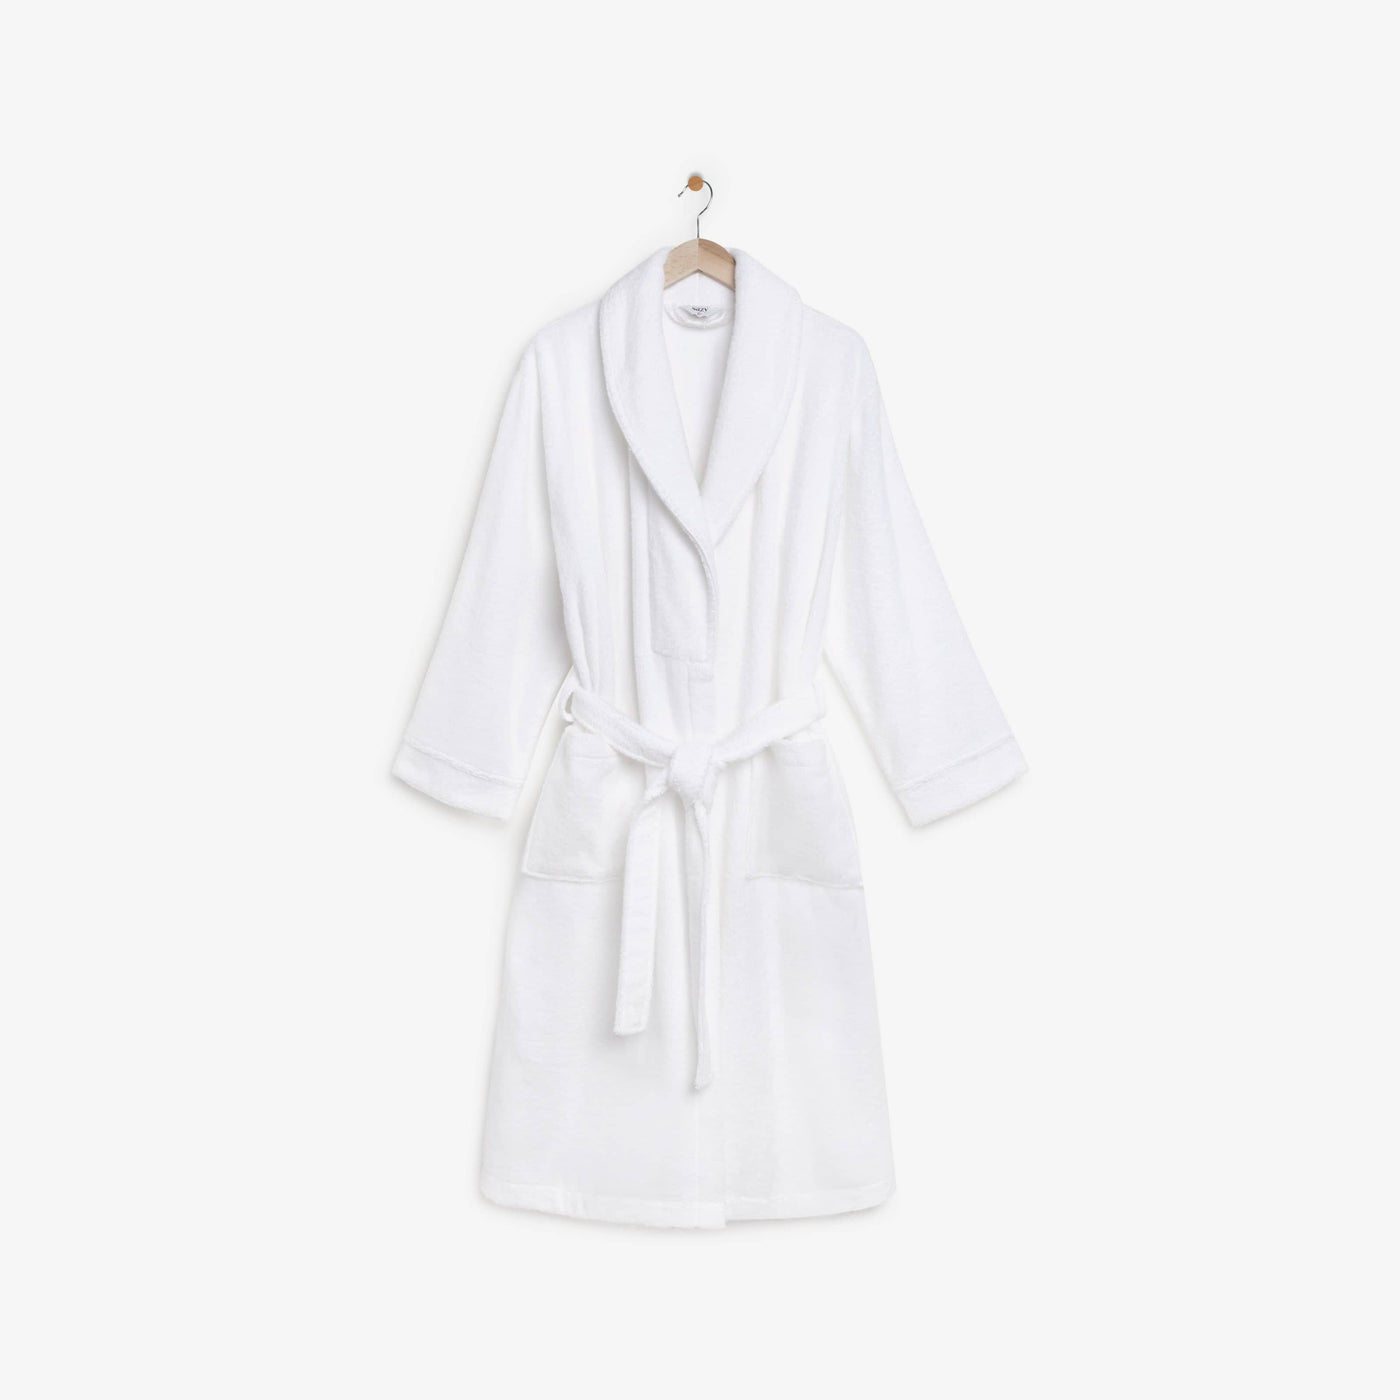 Rupert Aqua Fibro Extra Soft 100% Turkish Cotton Men's Dressing Gown, White, XL Dressing Gowns sazy.com